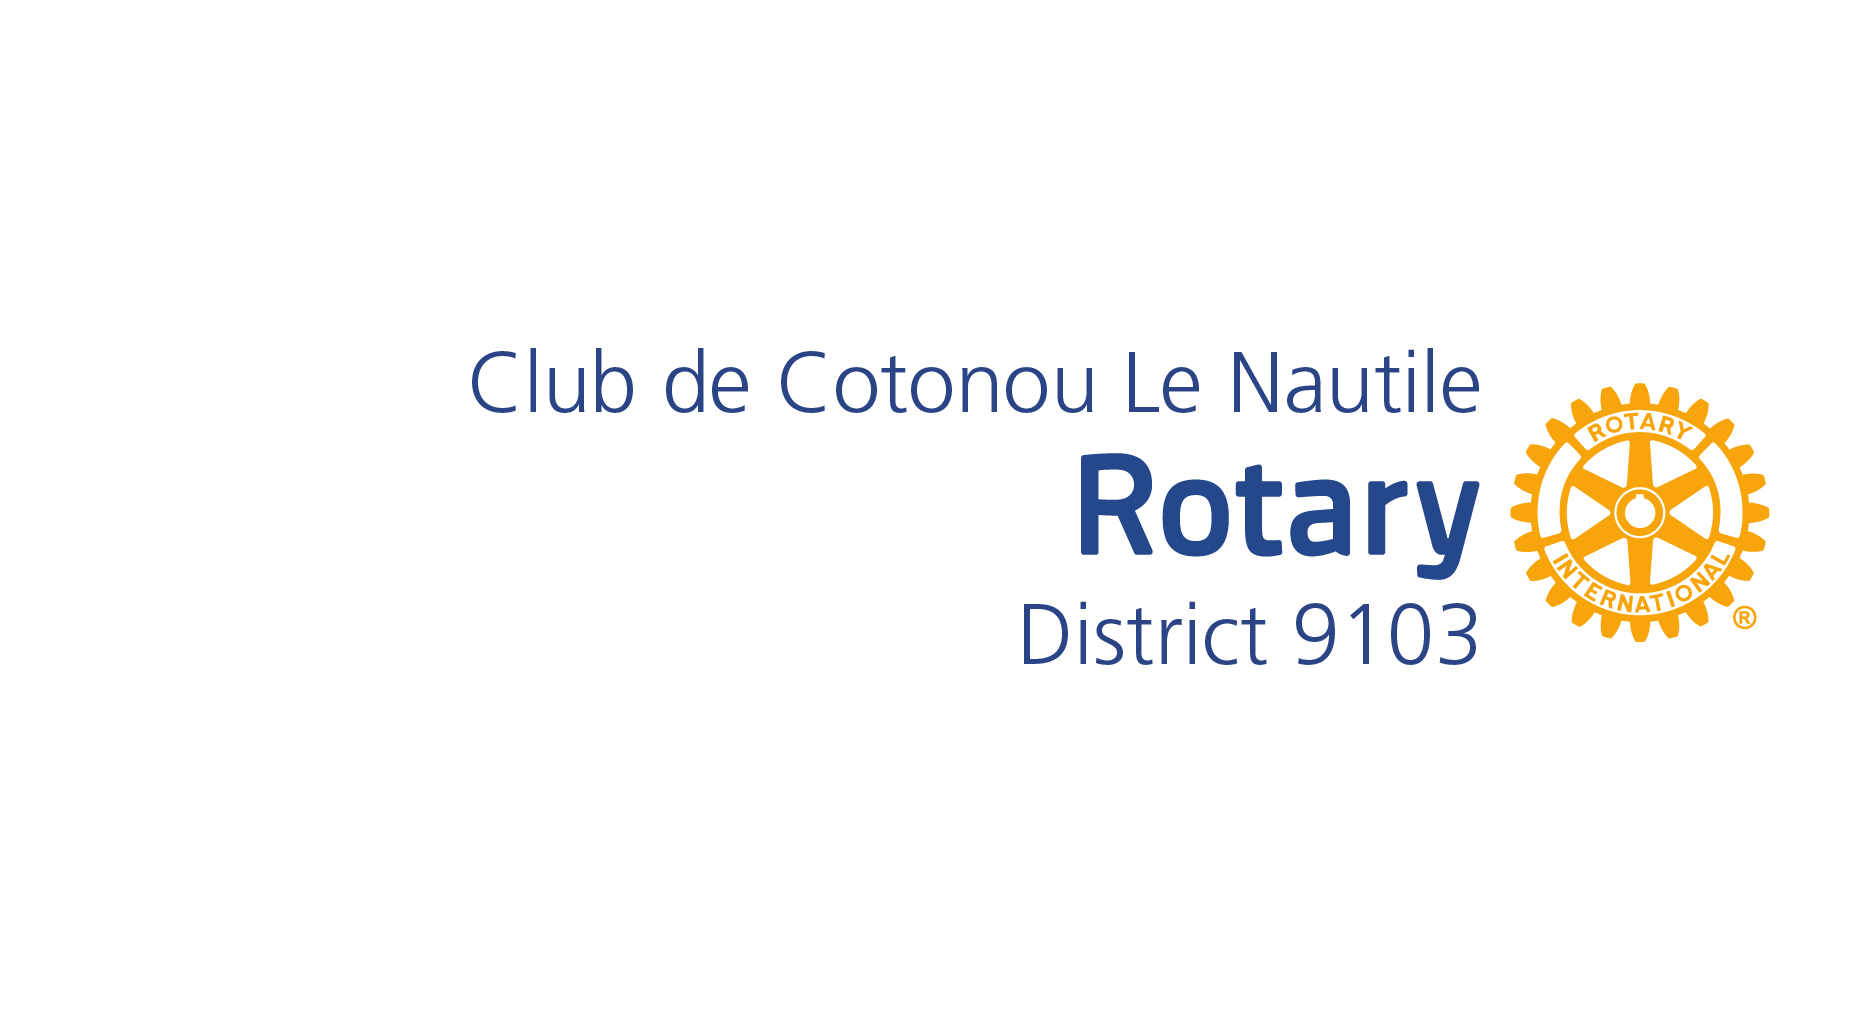 Rotary Club de Cotonou Le Nautile